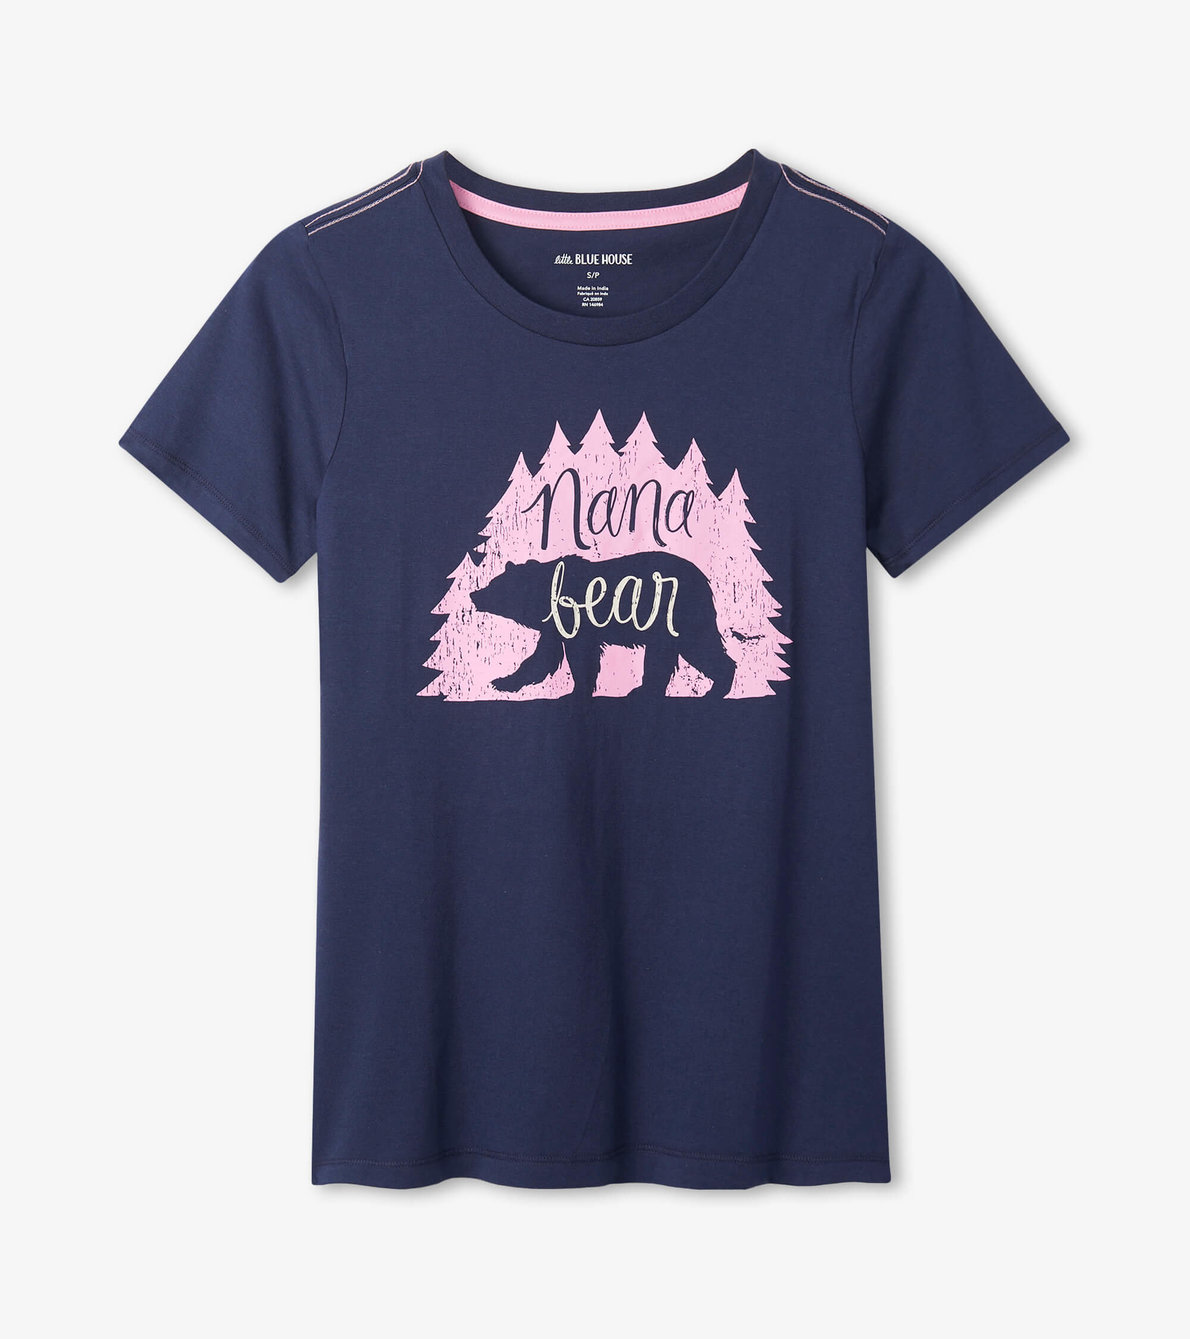 Agrandir l'image de T-shirt de pyjama pour femme – Nana ourse